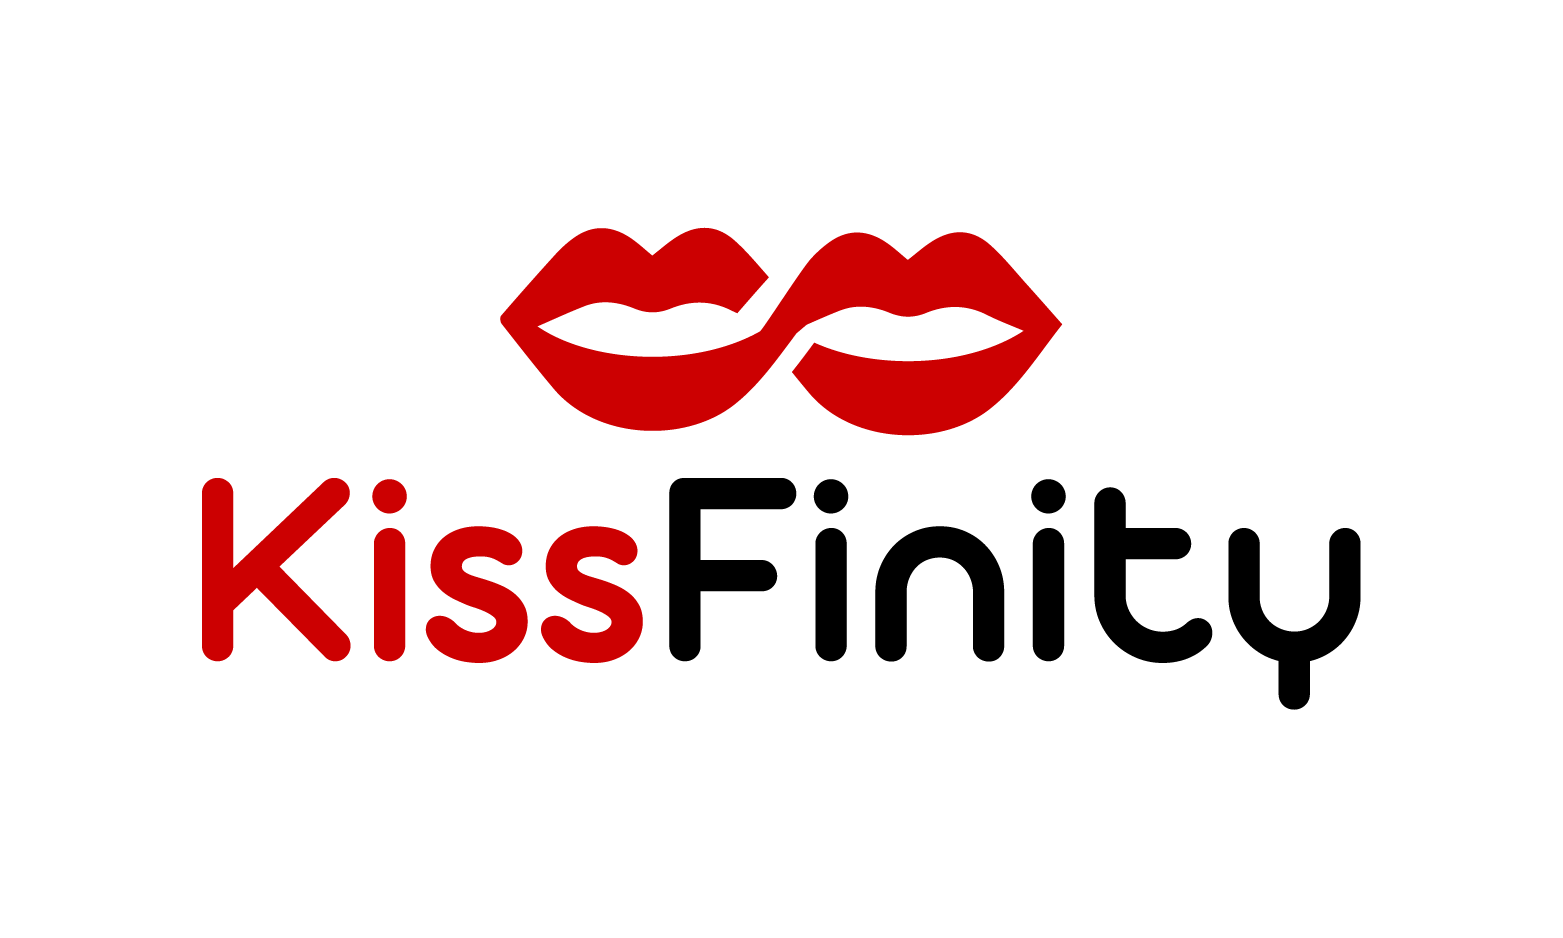 KissFinity.com - Creative brandable domain for sale